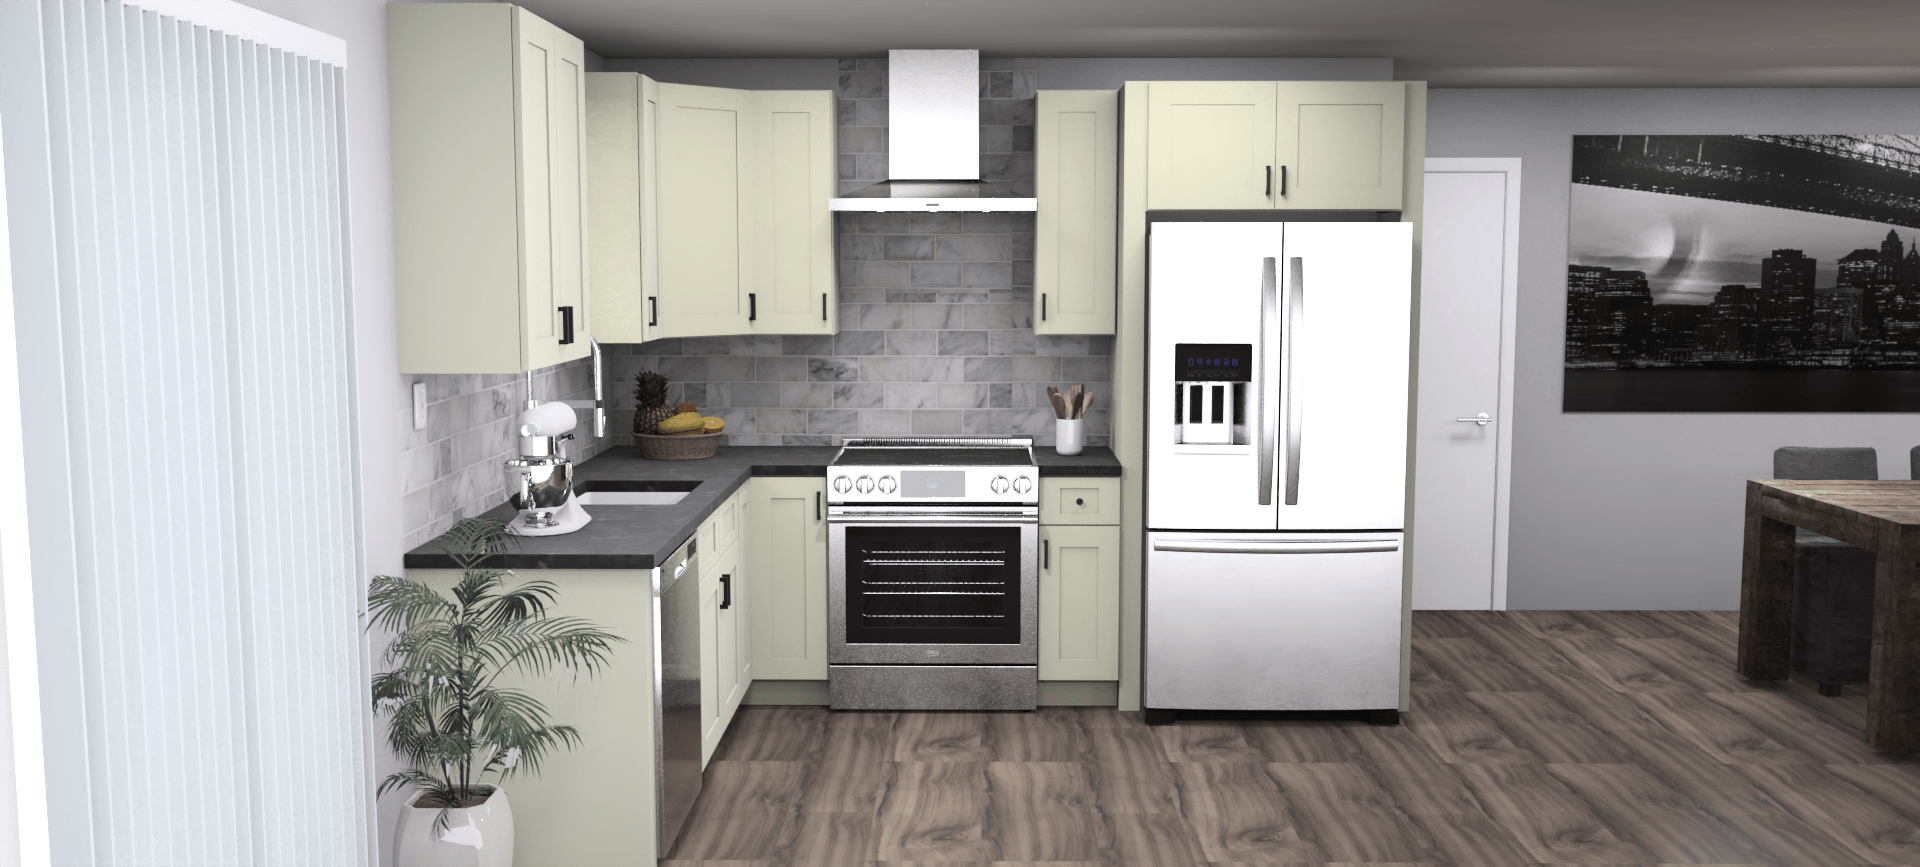 Fabuwood Allure Galaxy Linen 8 x 10 L Shaped Kitchen Front Layout Photo